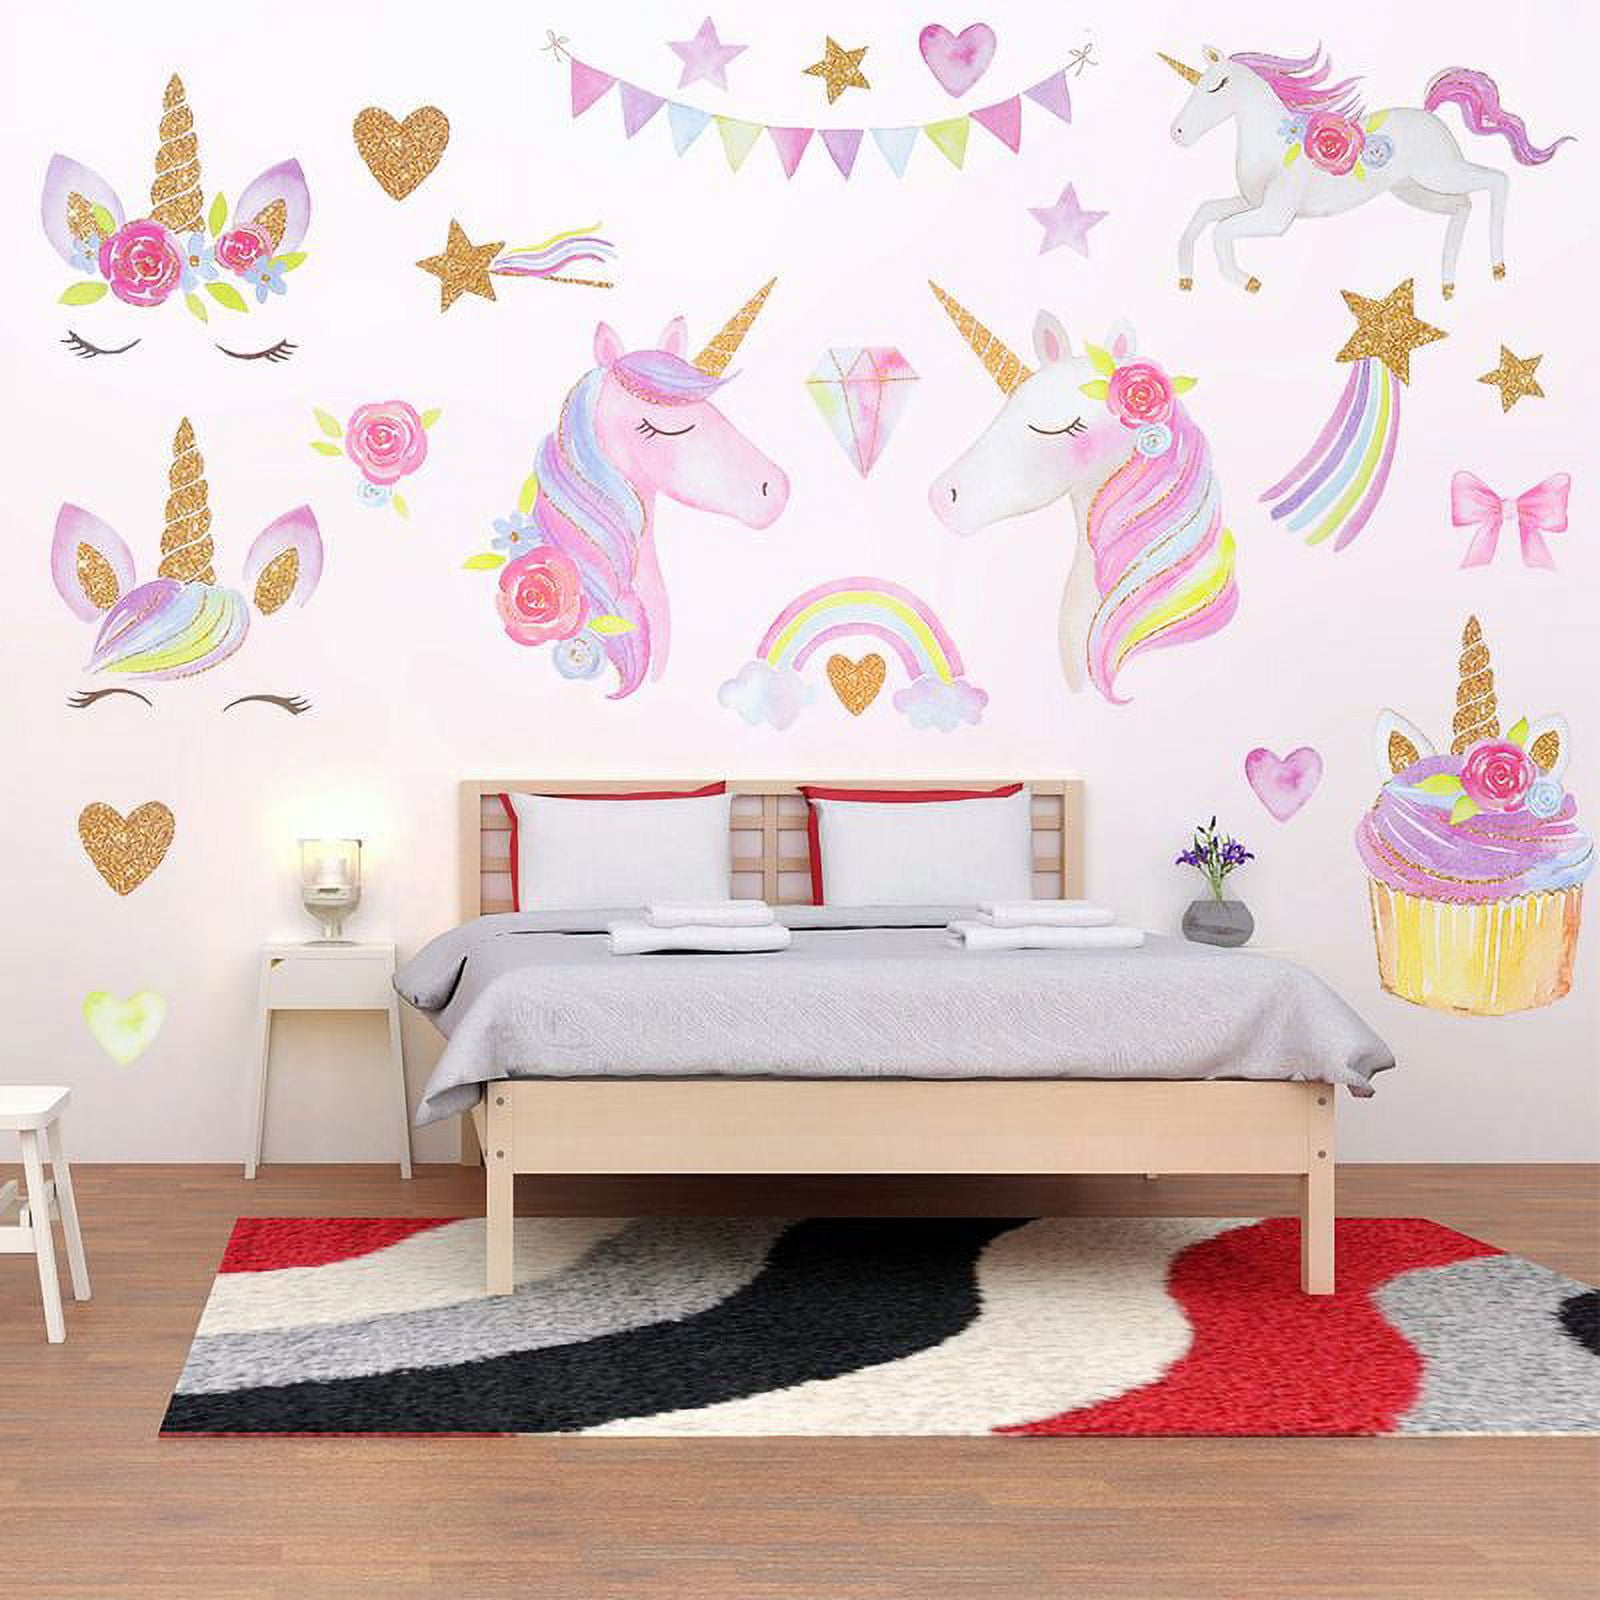 Taicanon Unicorn Wall Sticker ,Unicorn Wall Decals Decor with  Rainbow,Birthday Christmas Gifts for Boys Girls Kids Bedroom Decor 